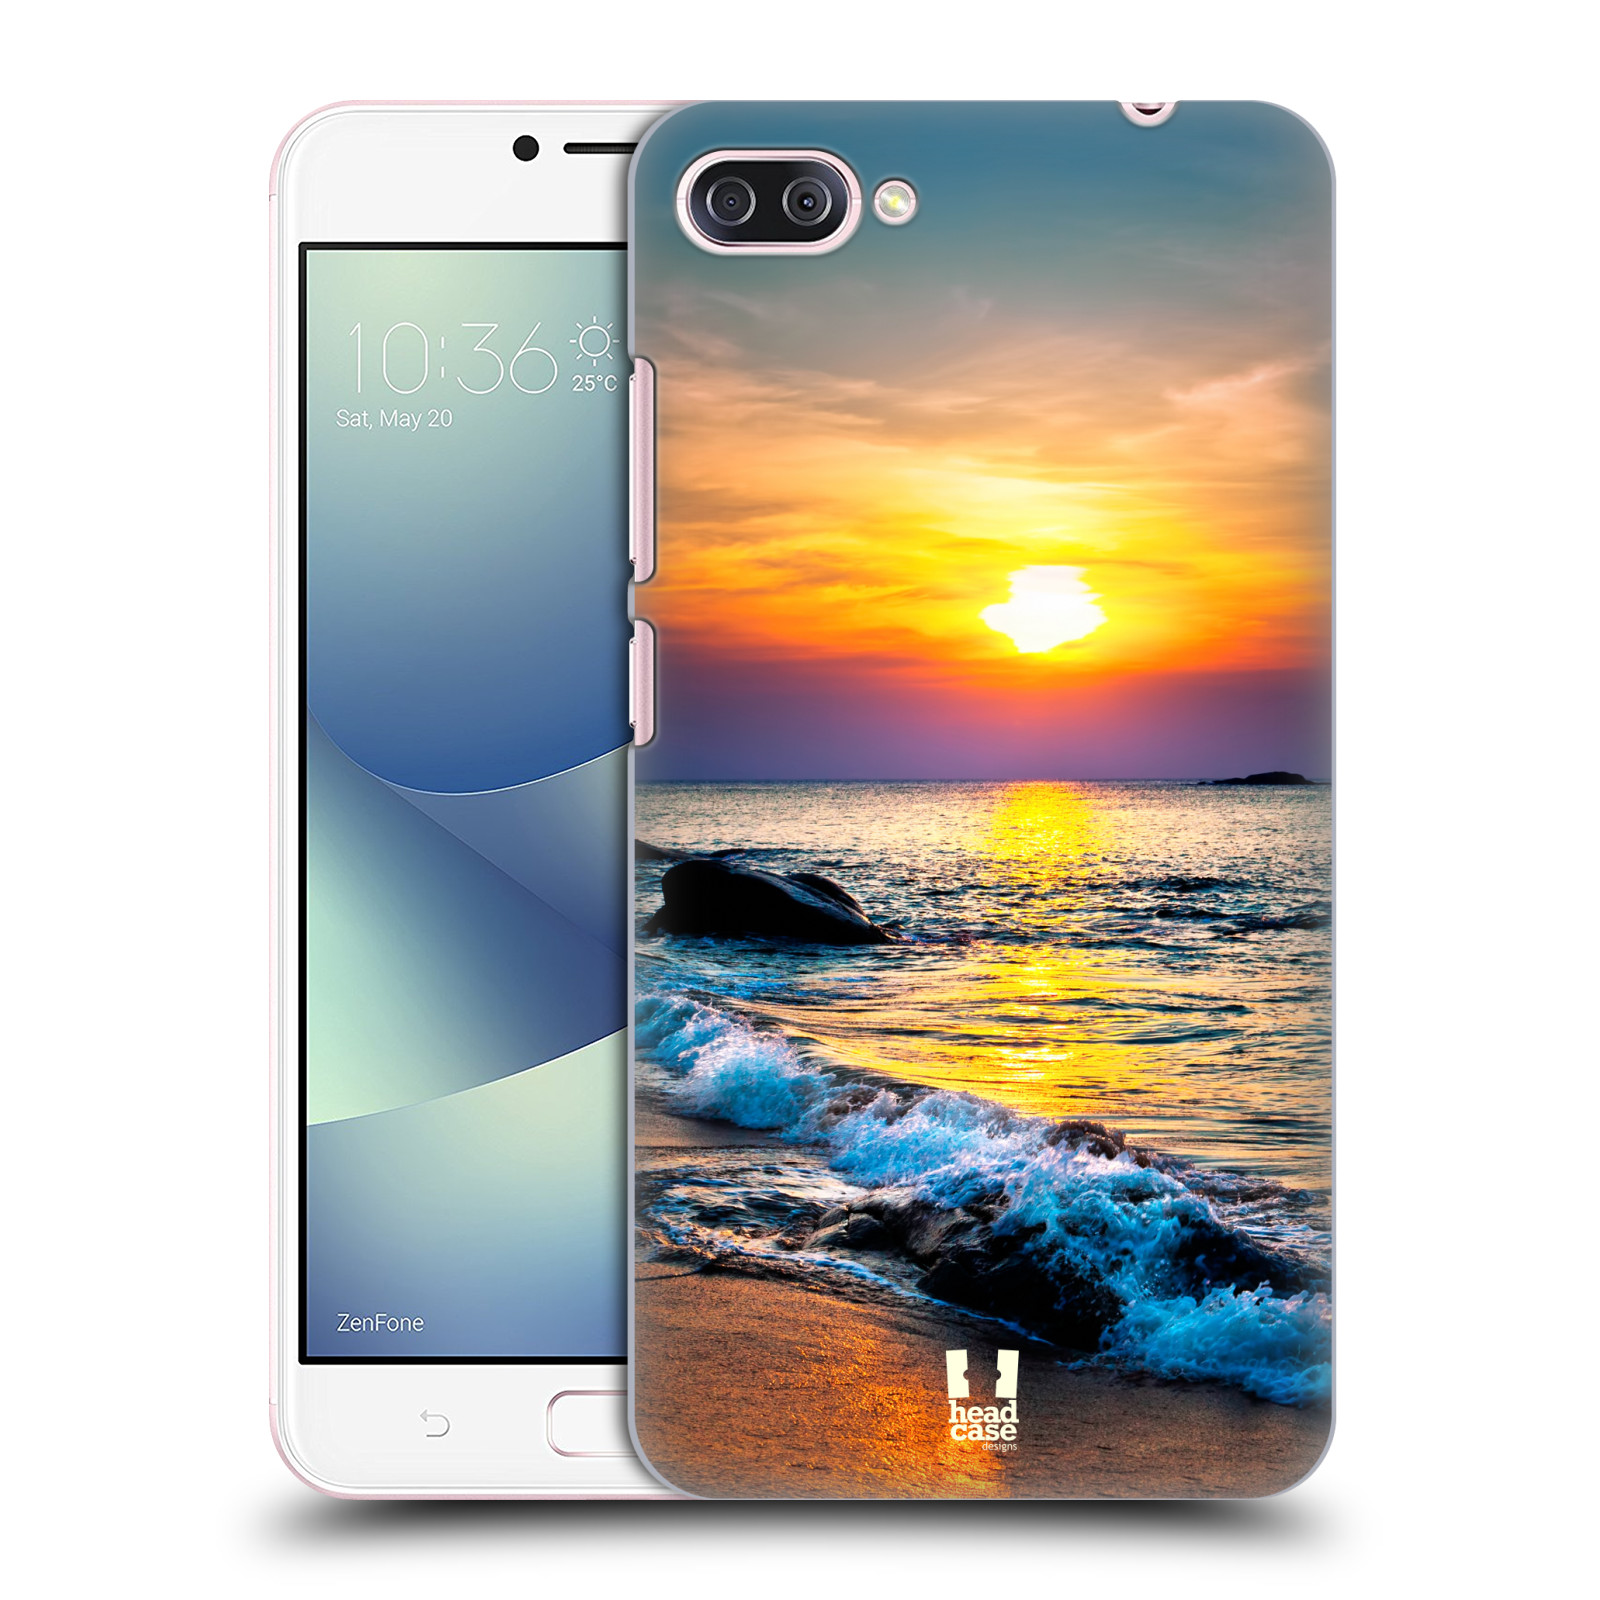 HEAD CASE plastový obal na mobil Asus Zenfone 4 MAX ZC554KL vzor Pláže a Moře barevný západ slunce